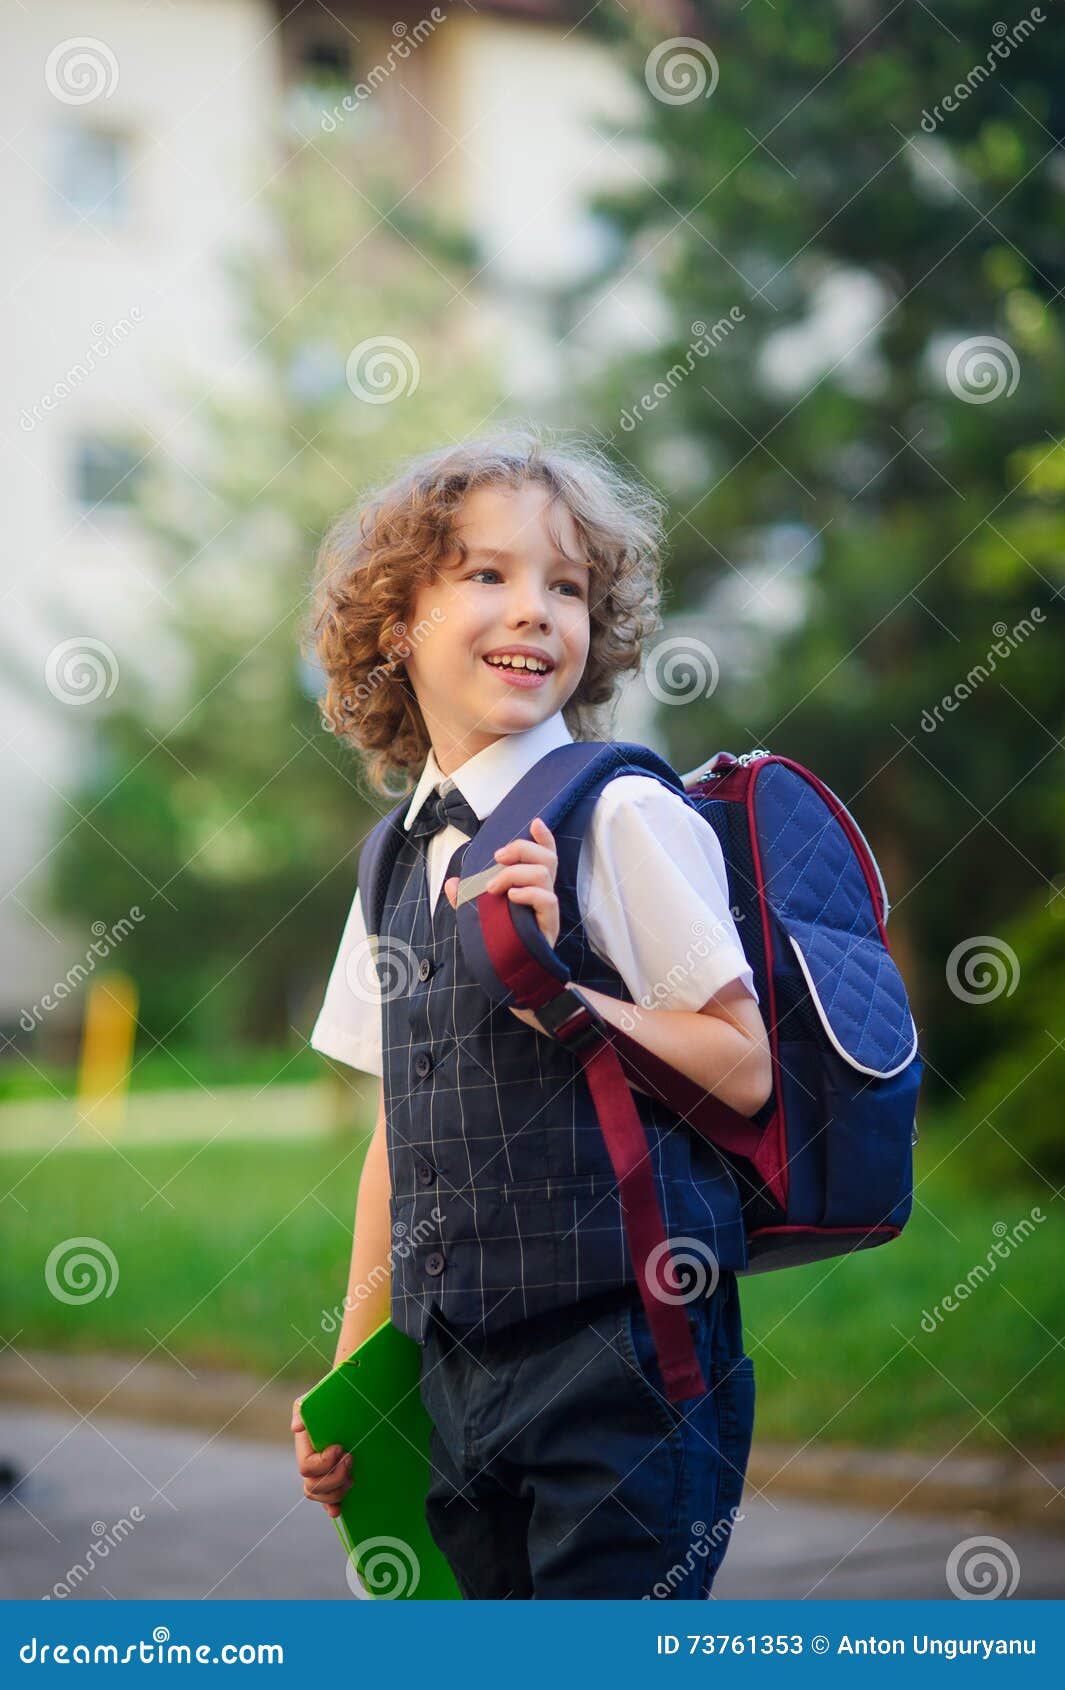 https://thumbs.dreamstime.com/z/primary-school-students-standing-yard-little-schoolboy-smartly-dressed-behind-boy-s-backpack-73761353.jpg